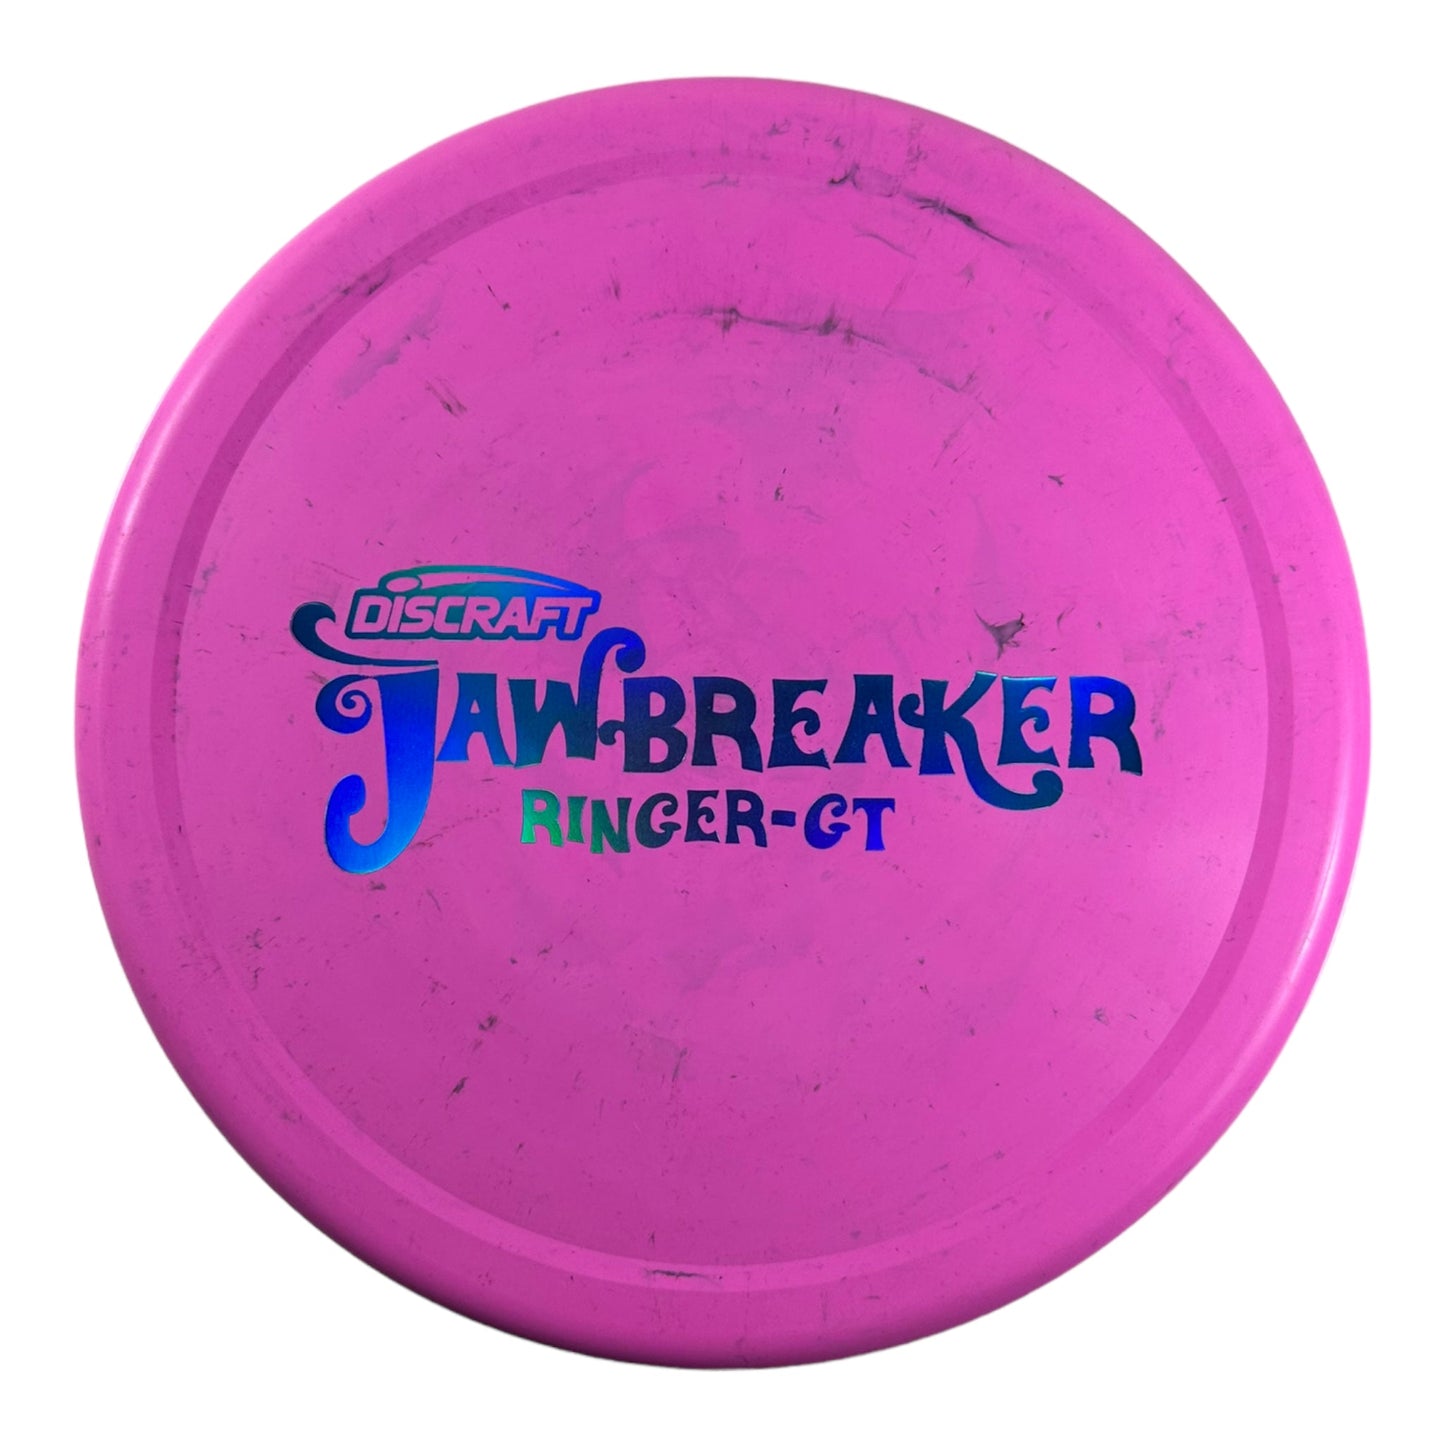 Discraft Ringer-GT | Jawbreaker | Pink/Blue 151g Disc Golf